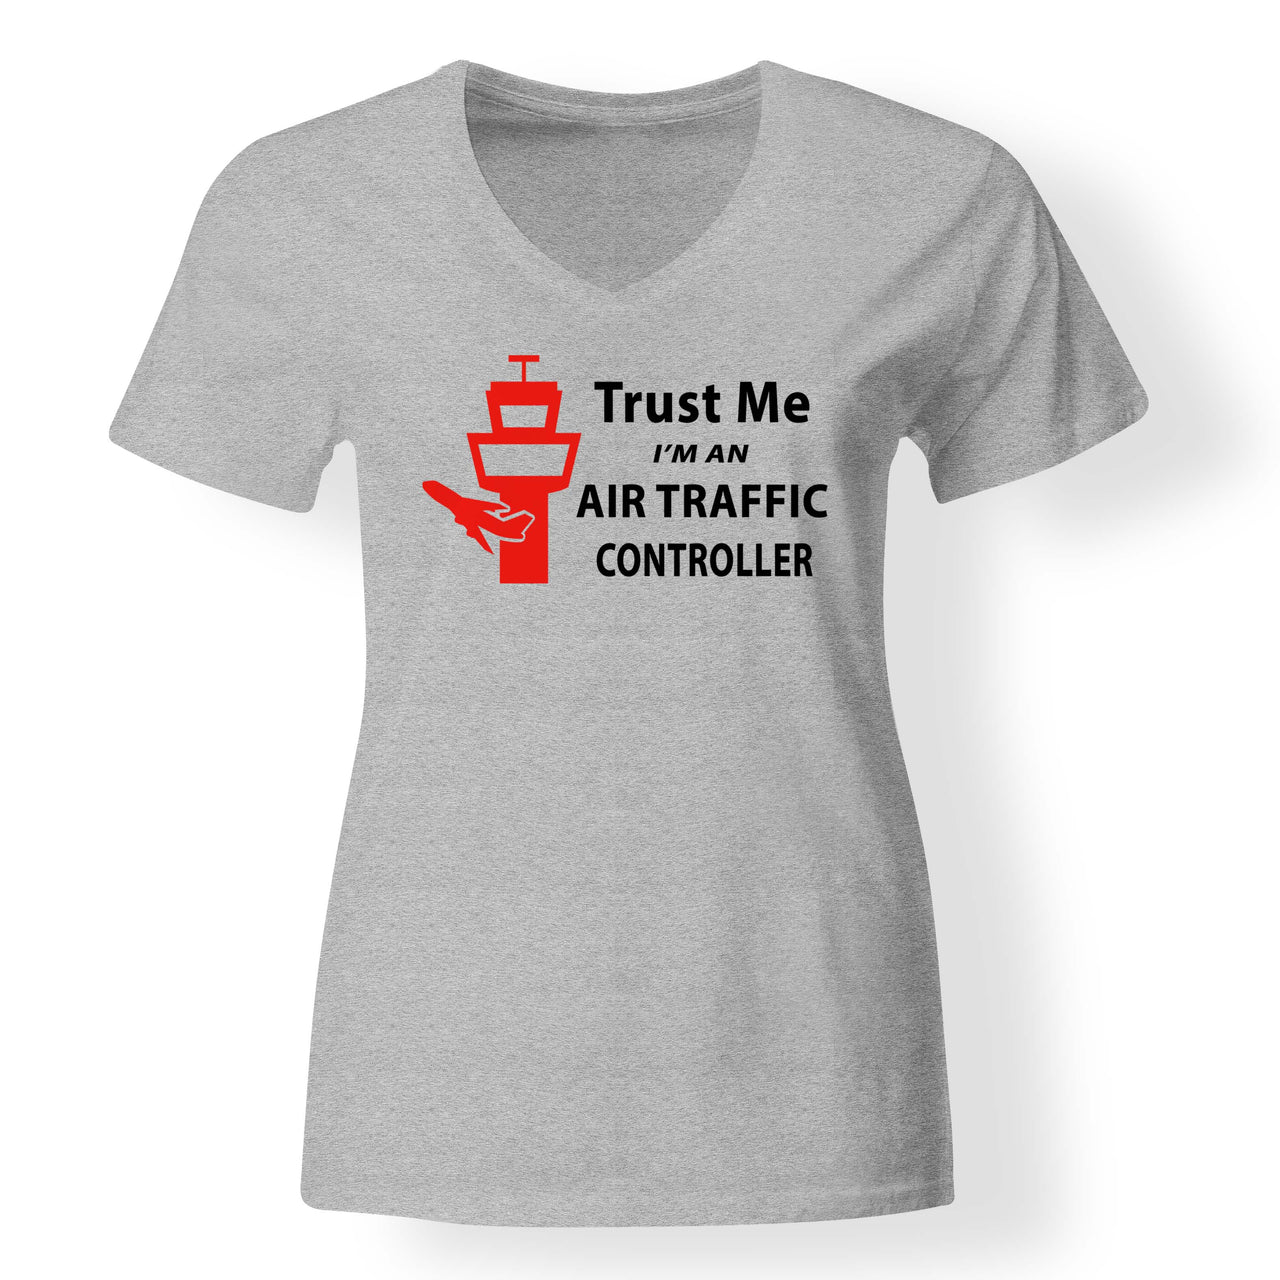 Trust Me I'm an Air Traffic Controller Designed V-Neck T-Shirts